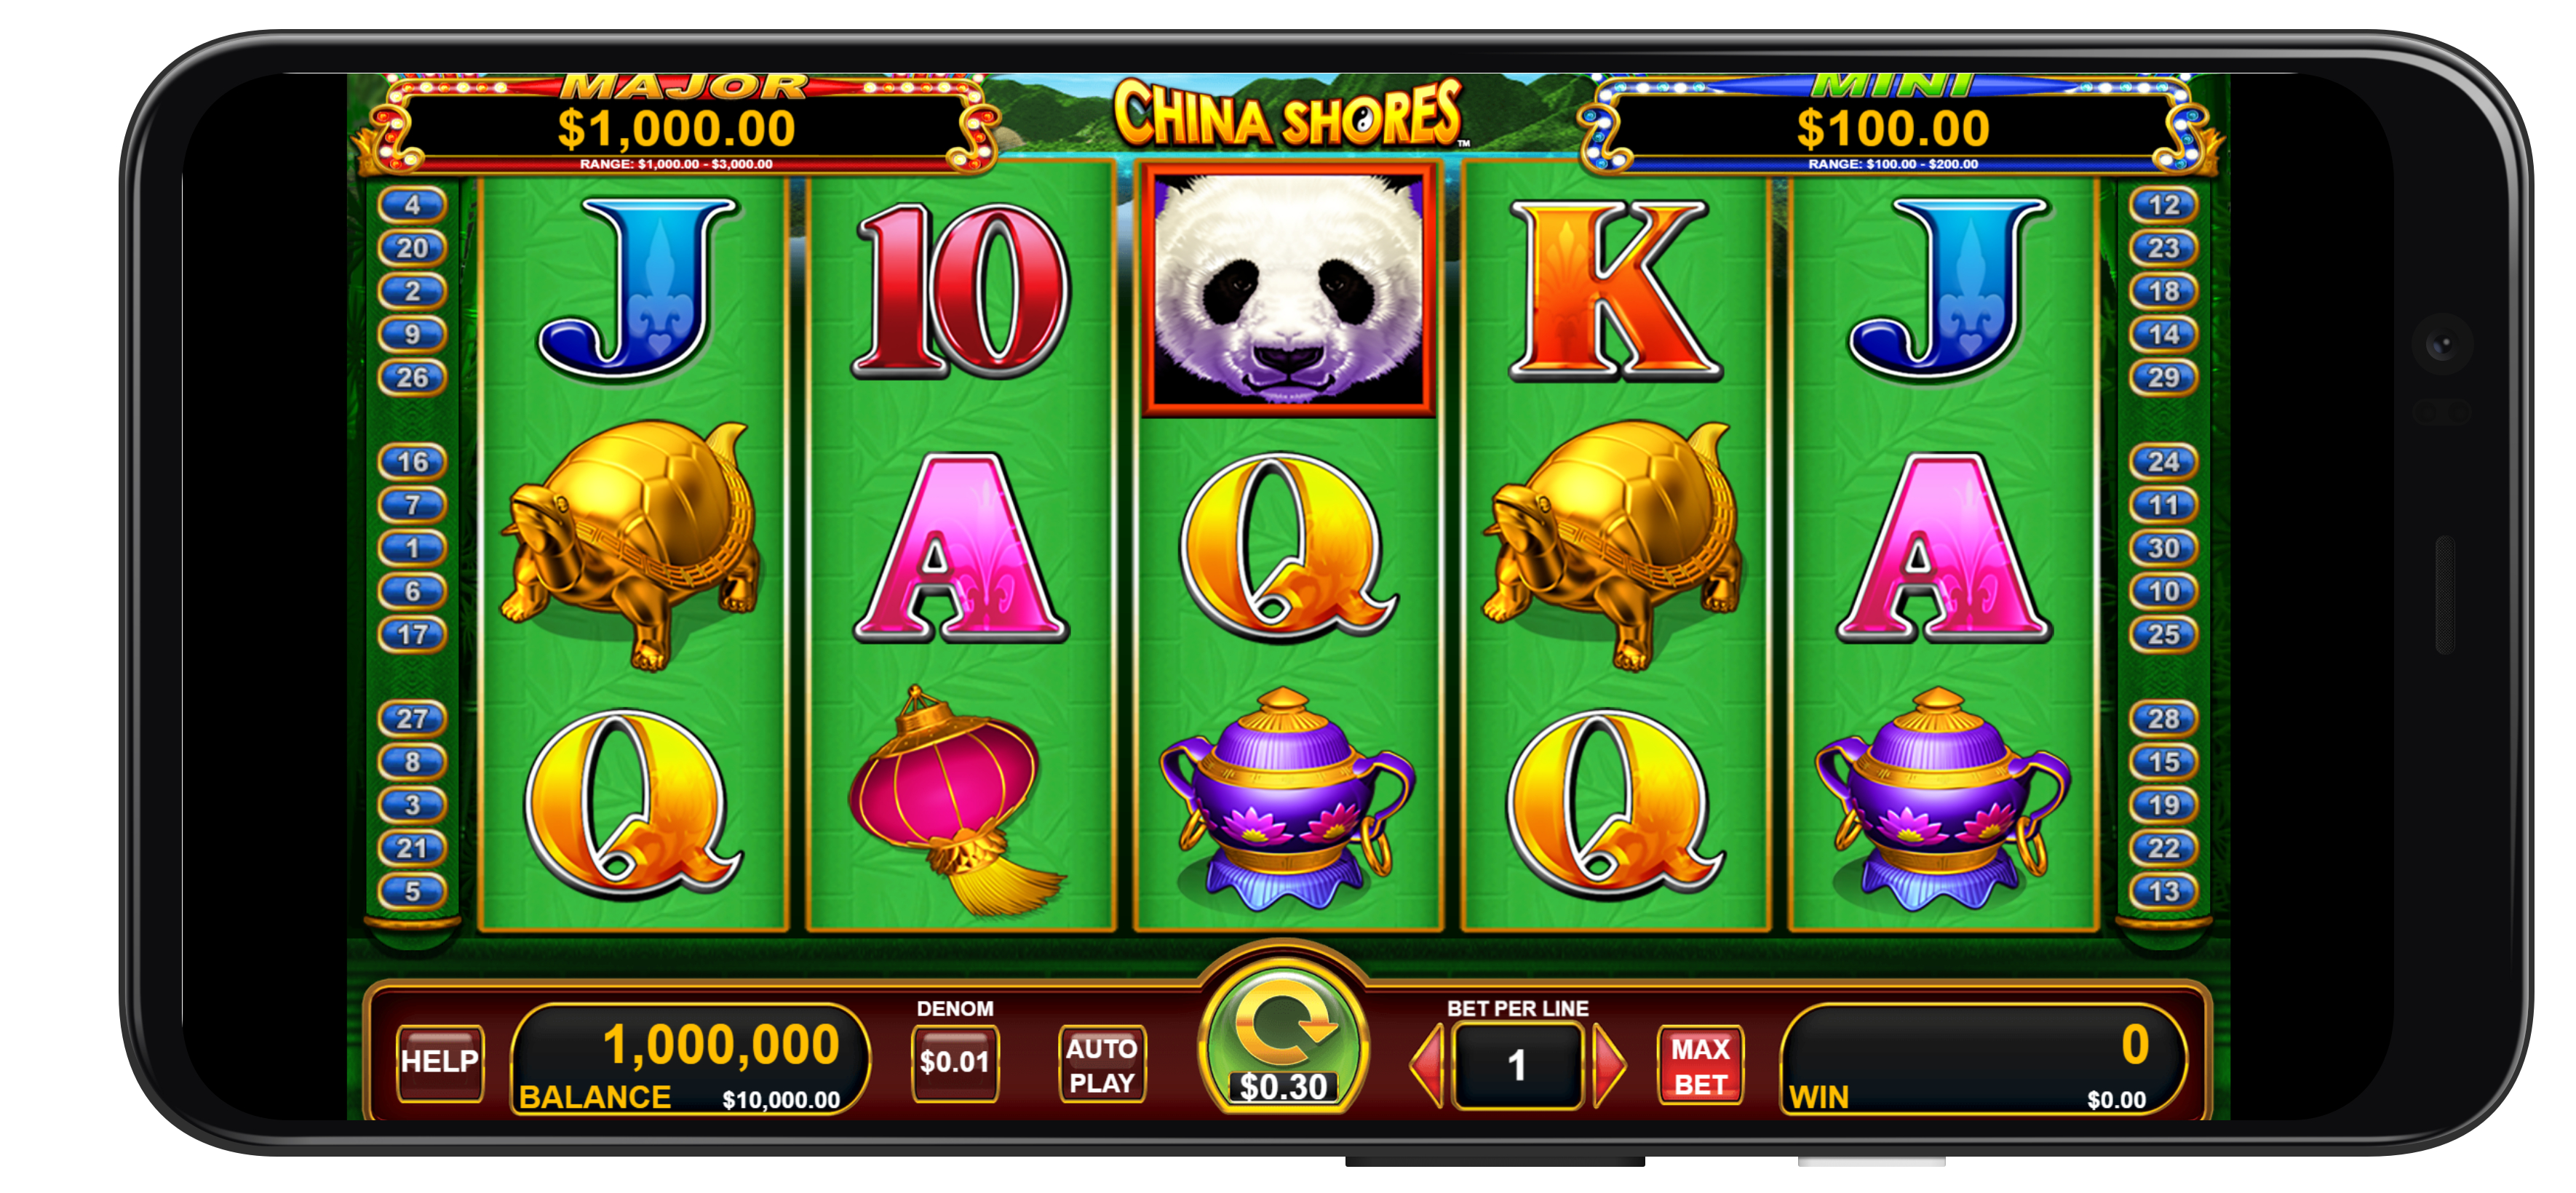 online casino slot games